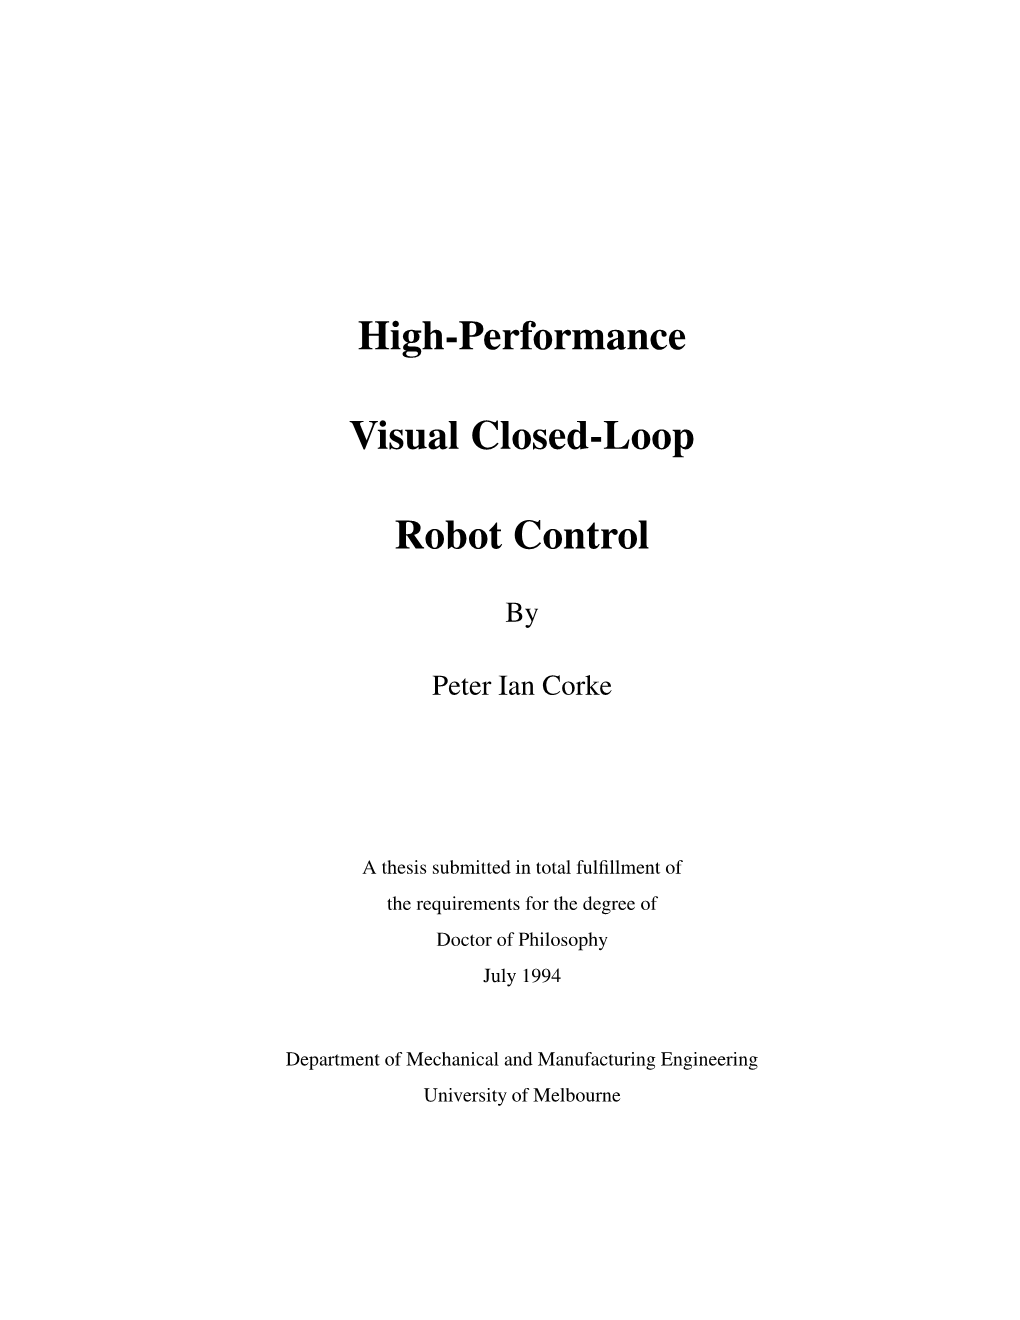 High-Performance Visual Closed-Loop Control